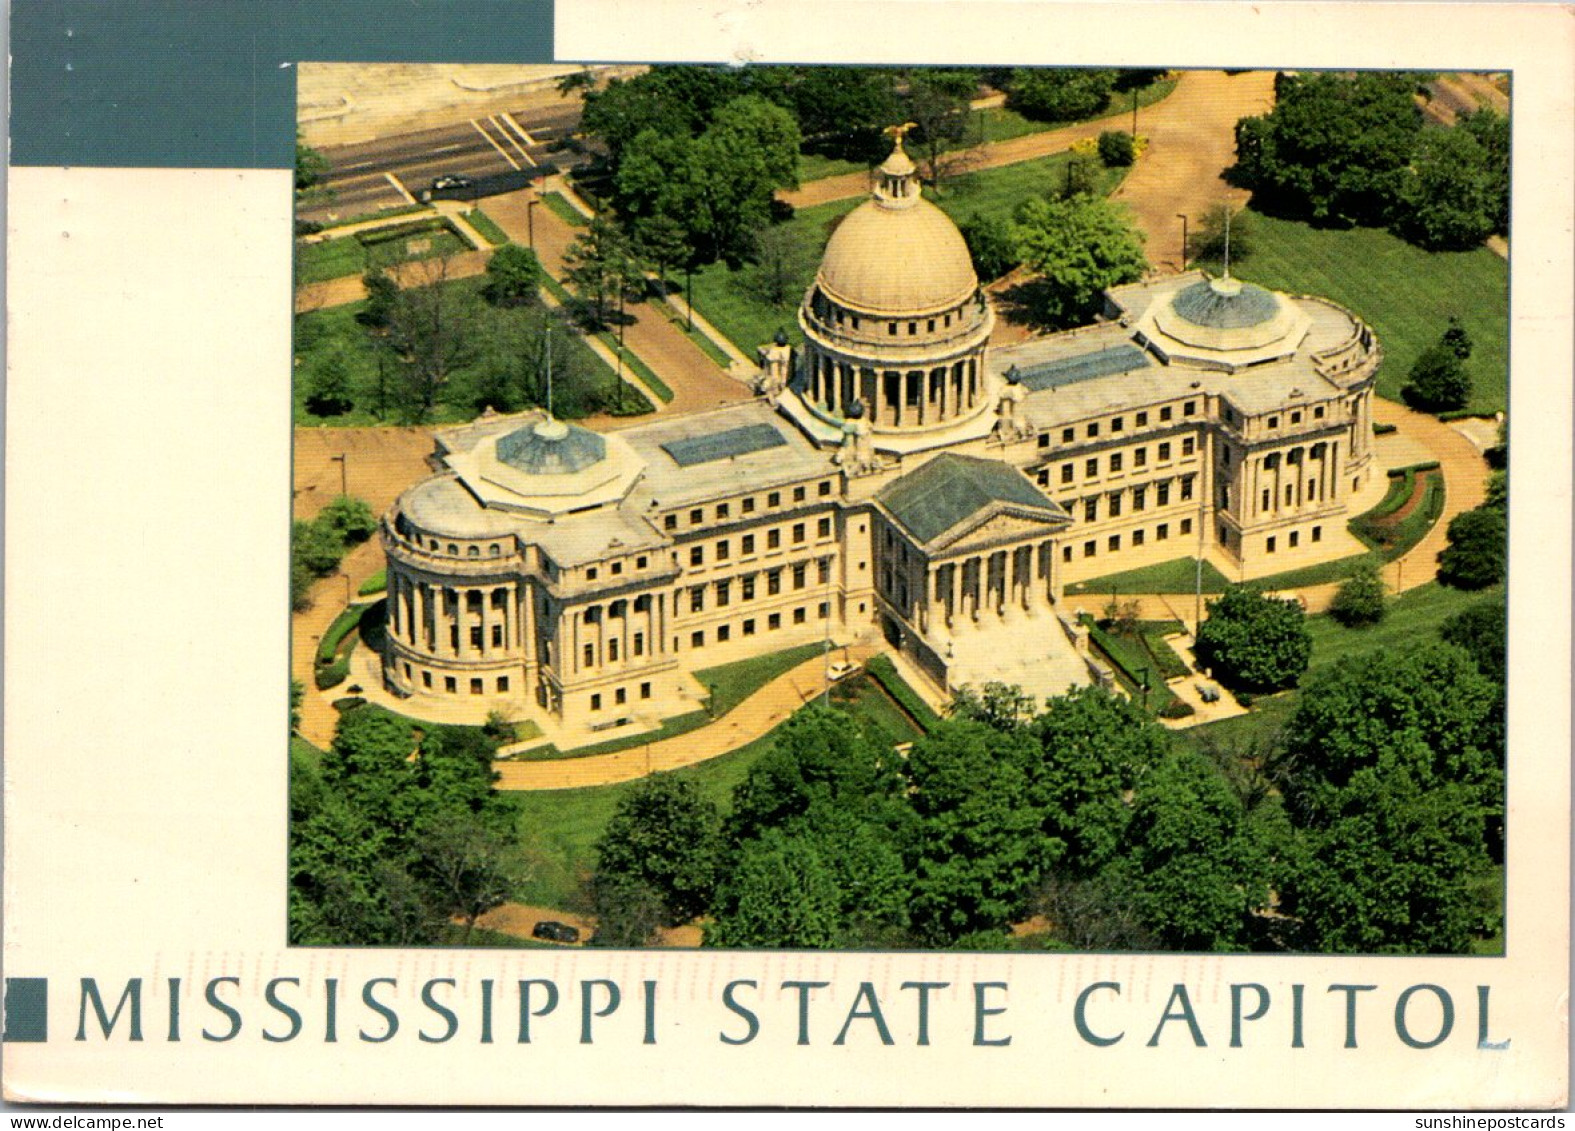 Mississippi Jackson State Capitol Building 1996 - Jackson